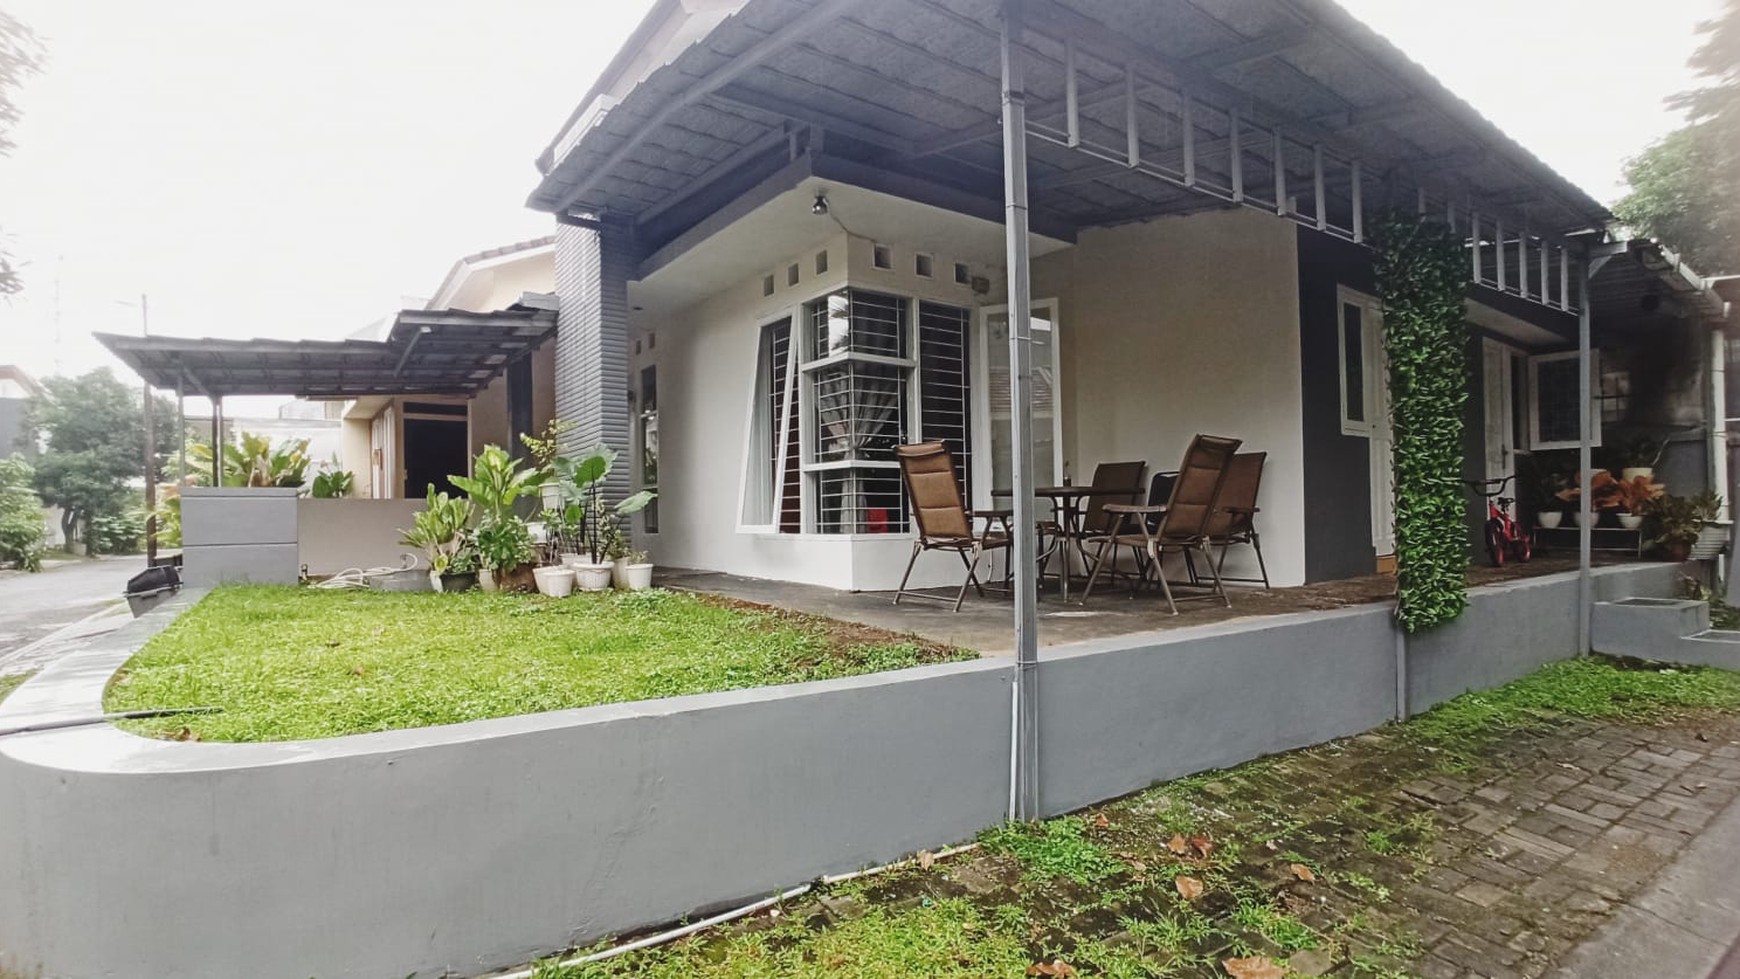 Rumah sejuk, Hoek, hadap Selatan bagus, lokasi strategis di Permata Bintaro Jaya Sektor 9